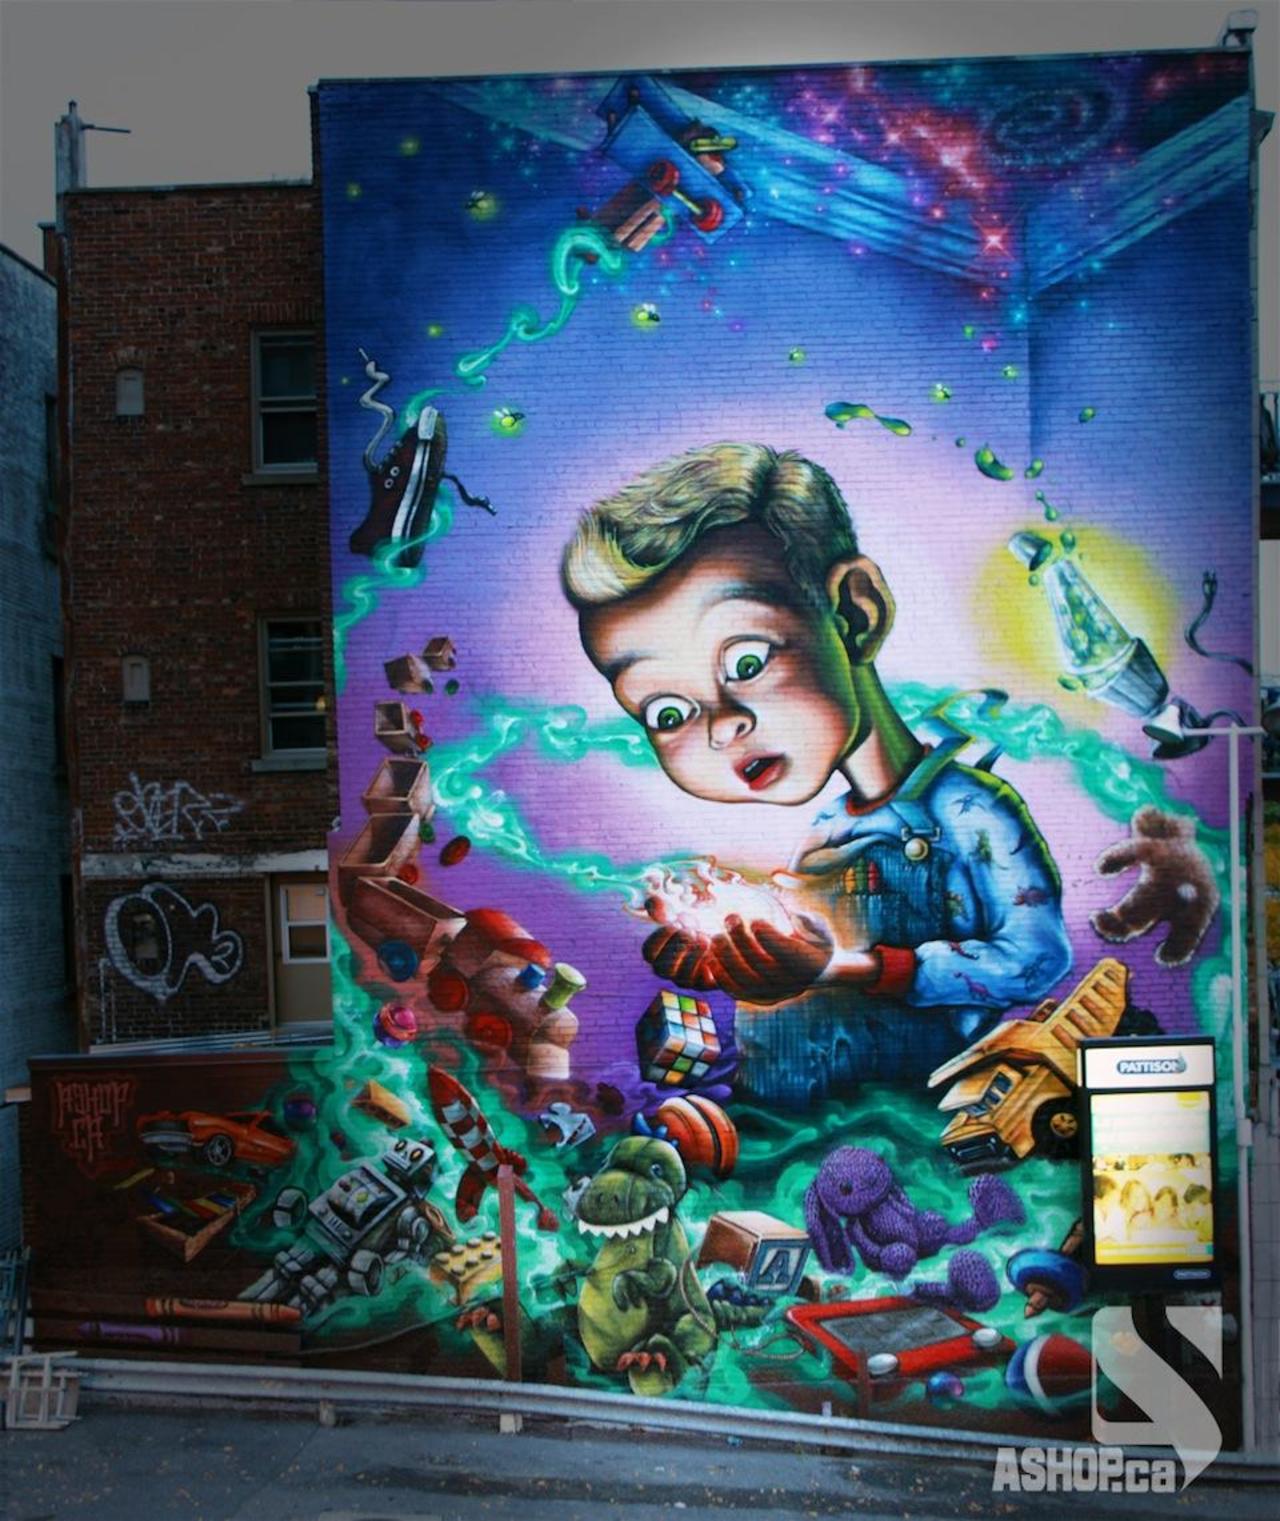 "@KimKaosDK: StreetArt By?
#StreetArt #art #UrbanArt http://t.co/9nJOFdSRrr" #graffiti #streetart #urbanart #spraypaint #stencil #mural #art